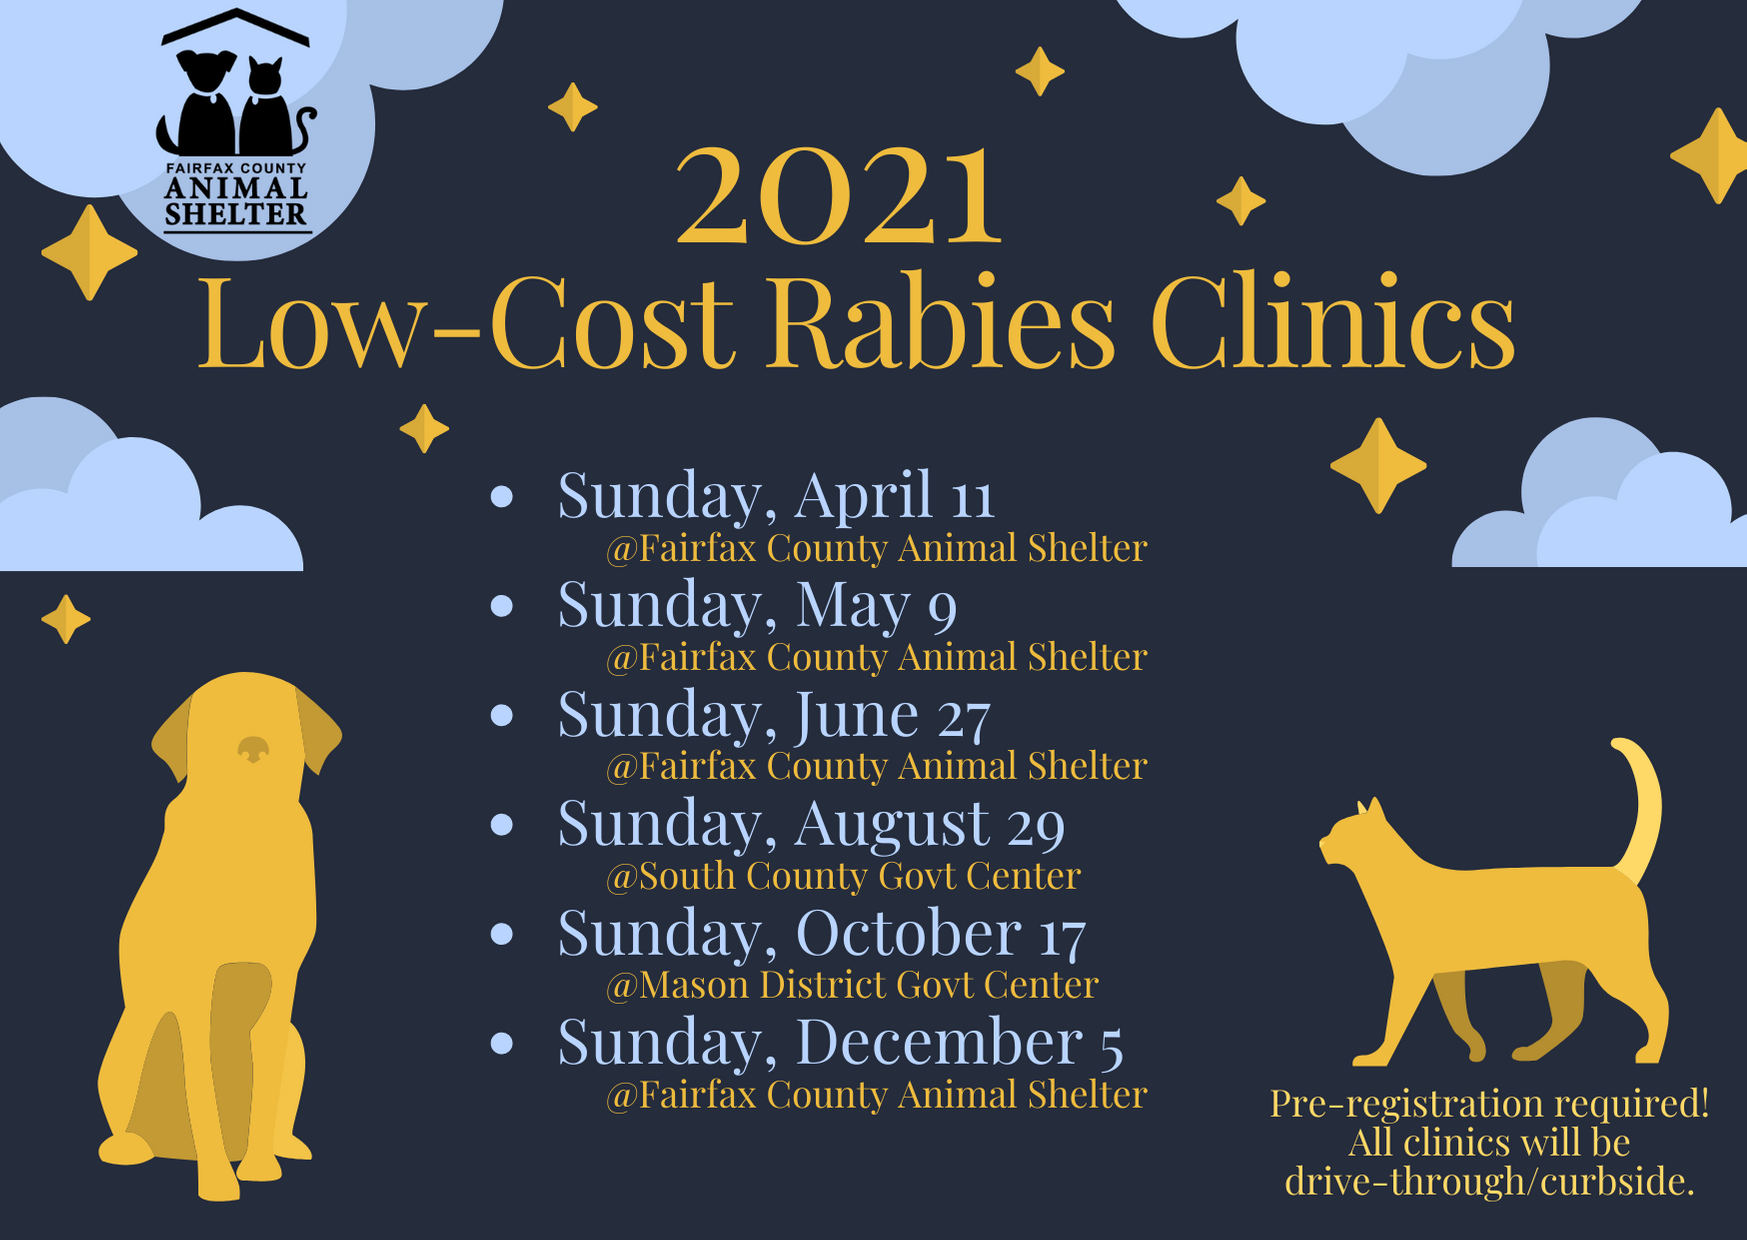 Schedule of 2021 Low-Cost Rabies Clinics